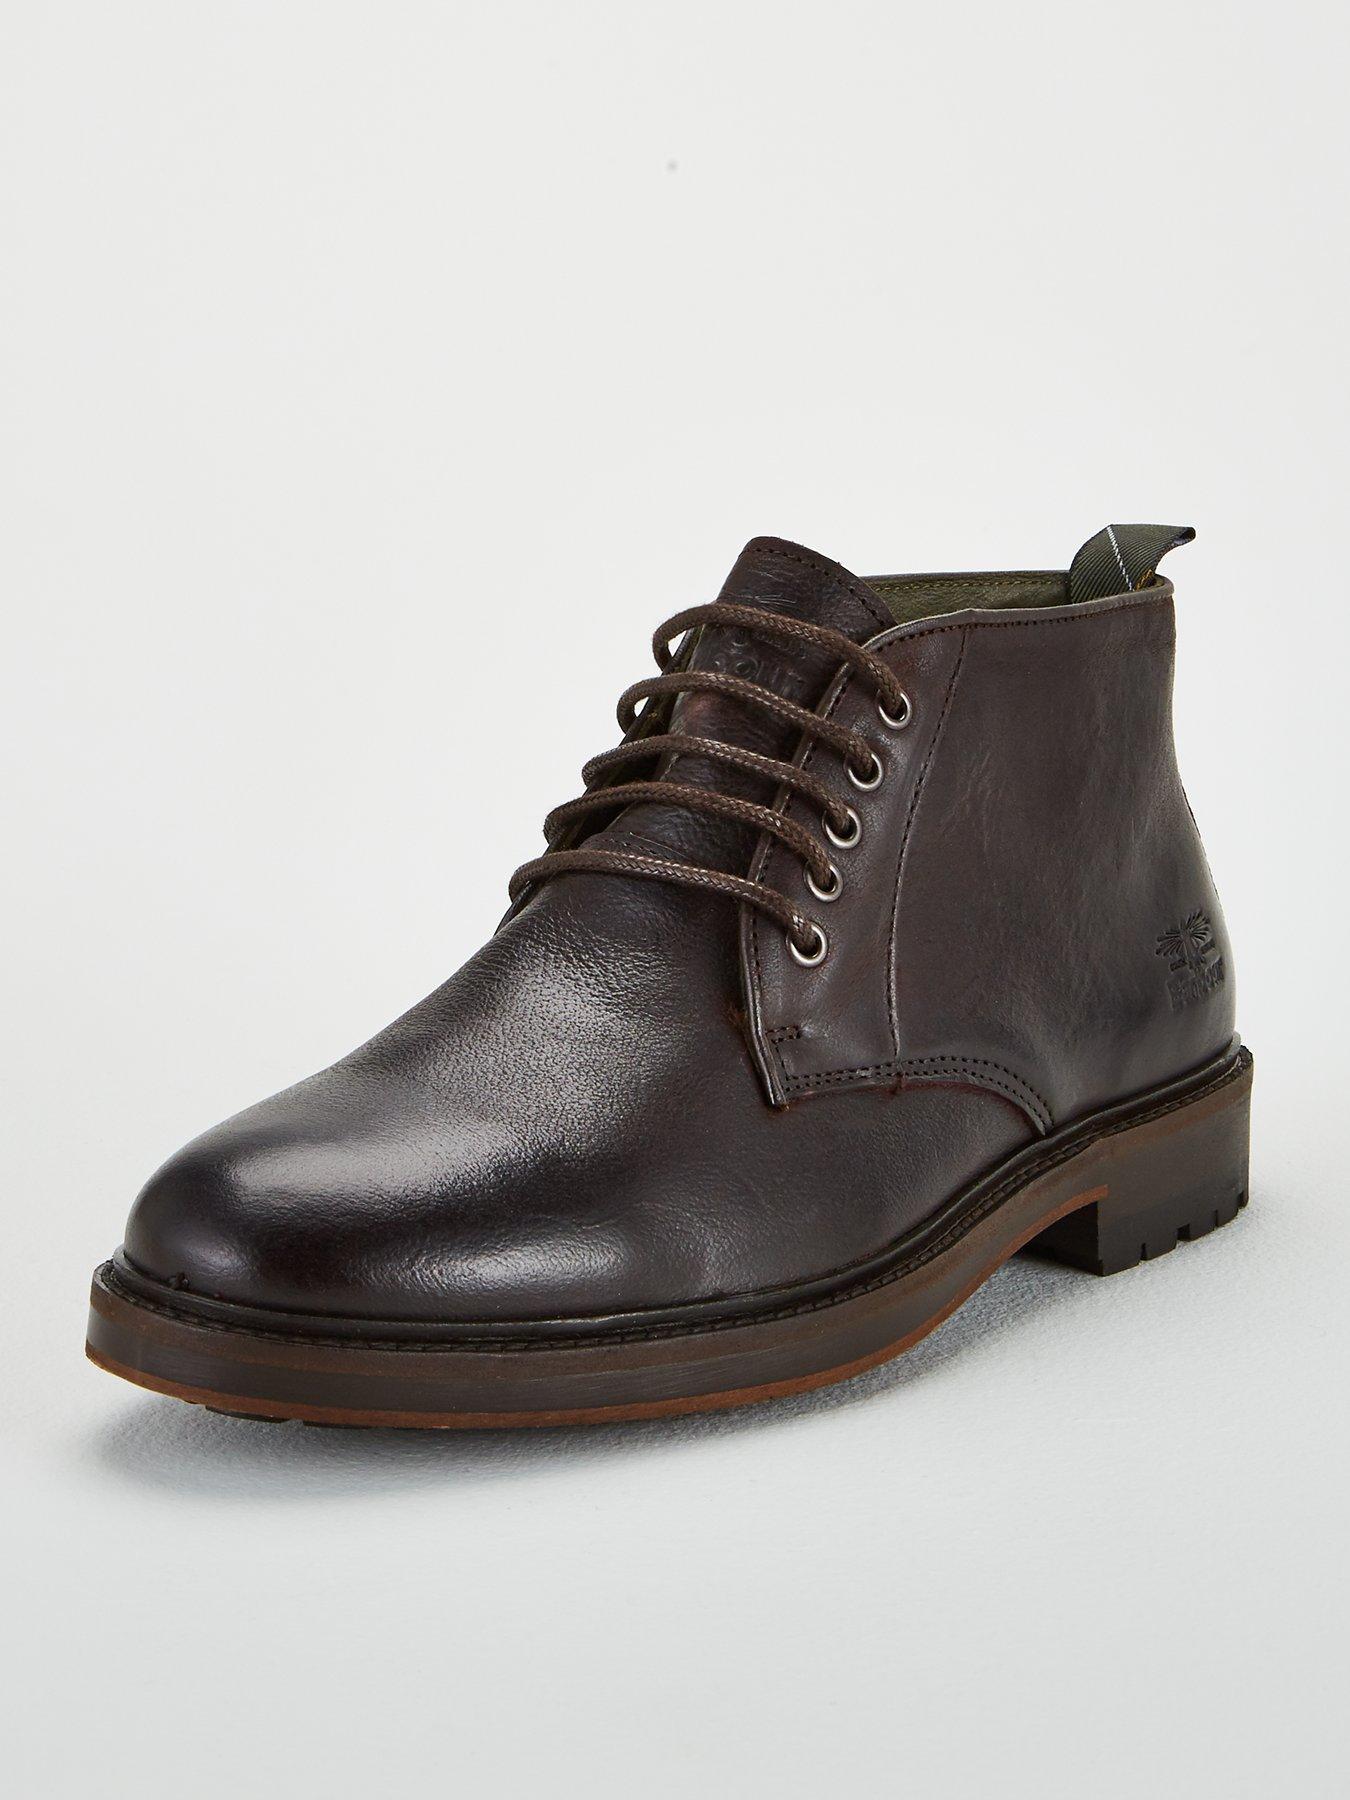 barbour chukka boots